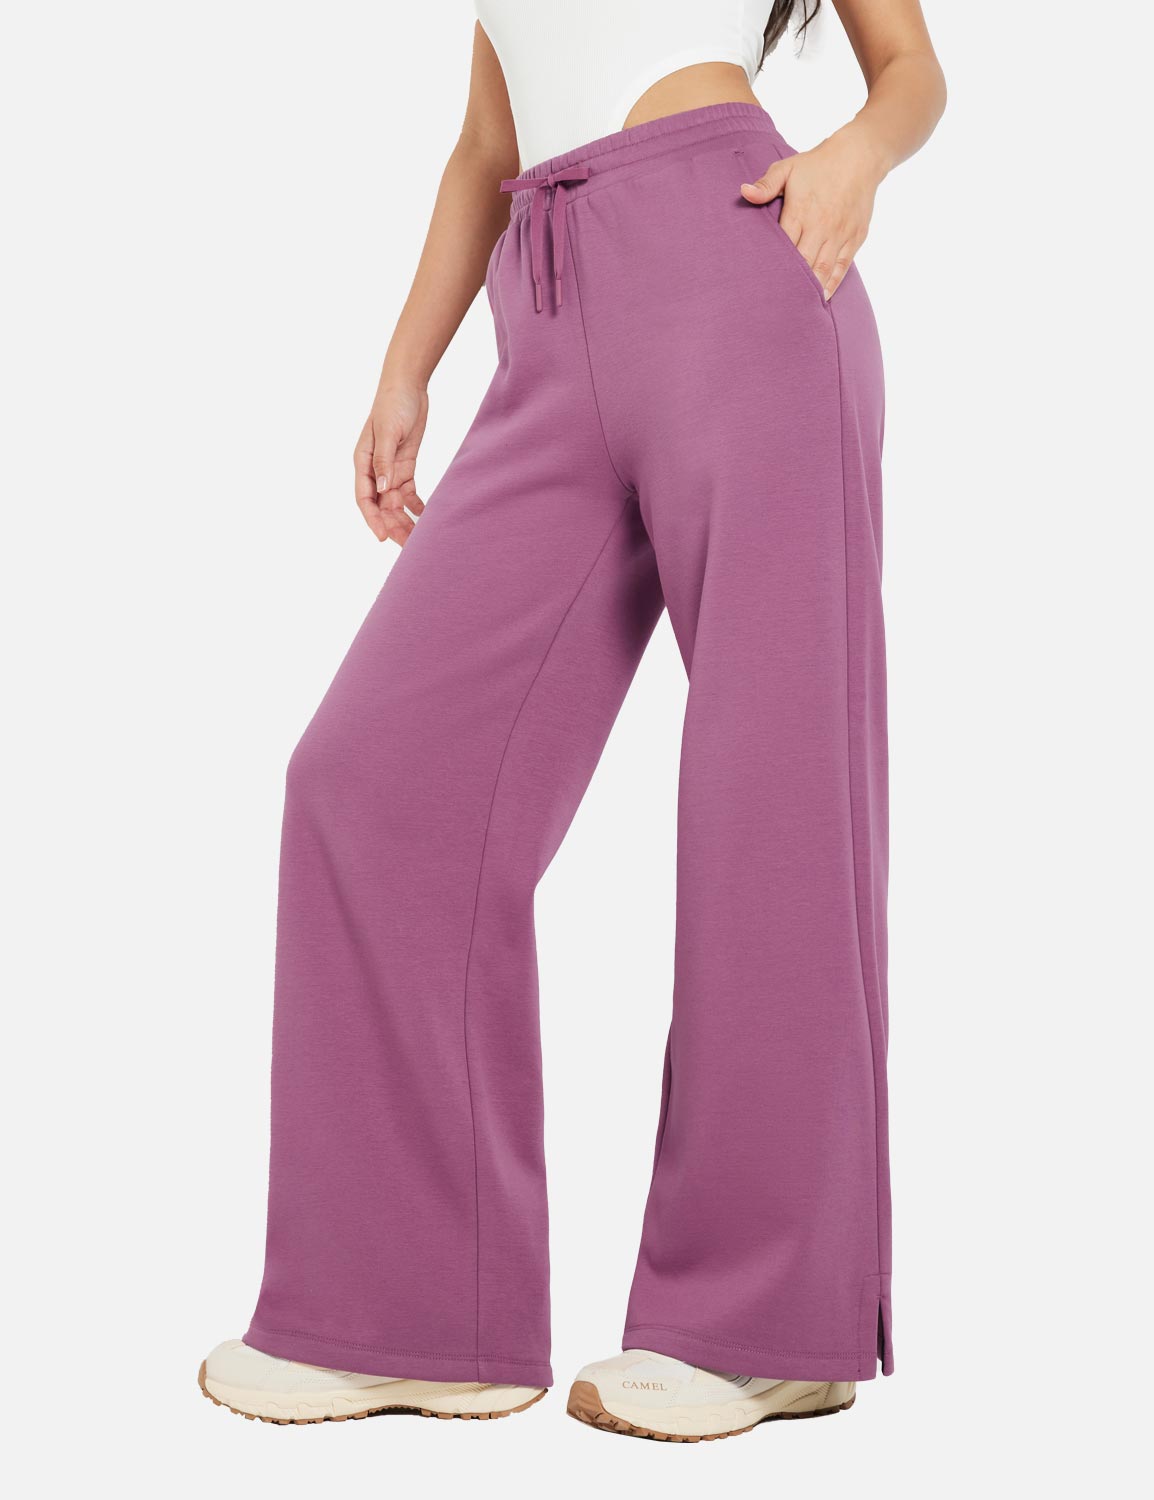 WOMENS 12 - Carhartt 102213 Fleece Lined Crawford Original Fit Pants | eBay